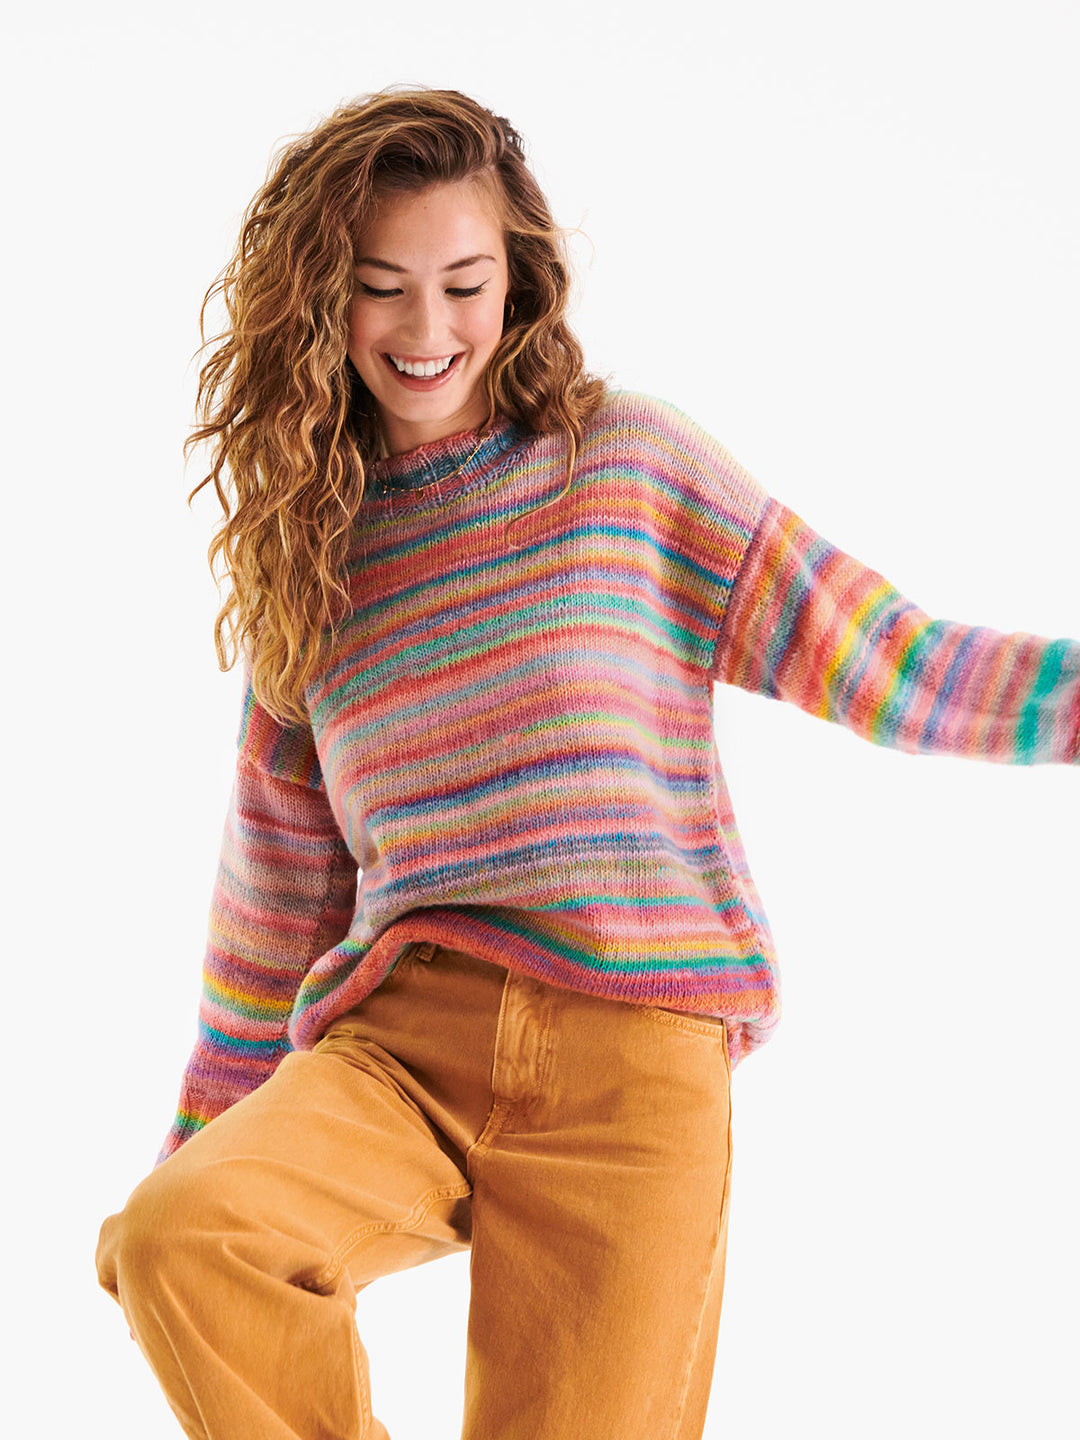 Breipakket Colorissimo trui in tricotsteek